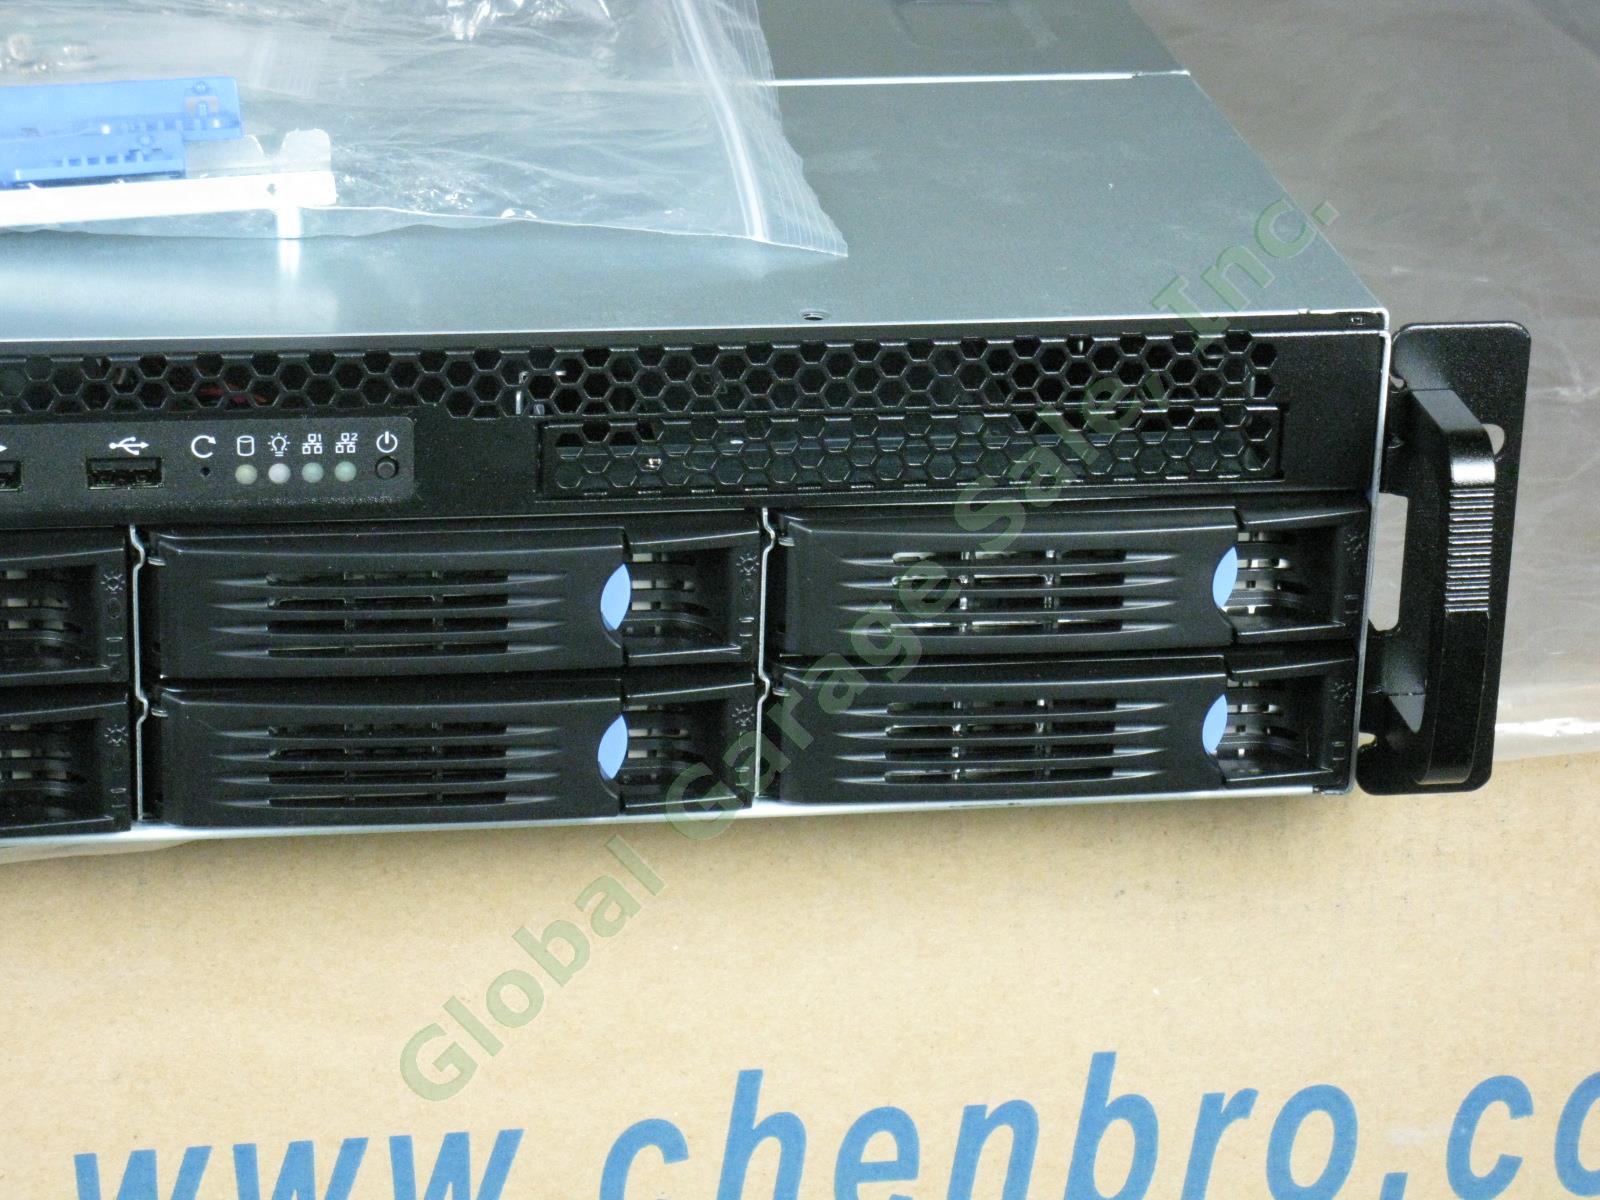 NEW Chenbro RM23608 2U 8-Bay Hot Swap Rack Mount Server Case Chassis SSI EEB 2